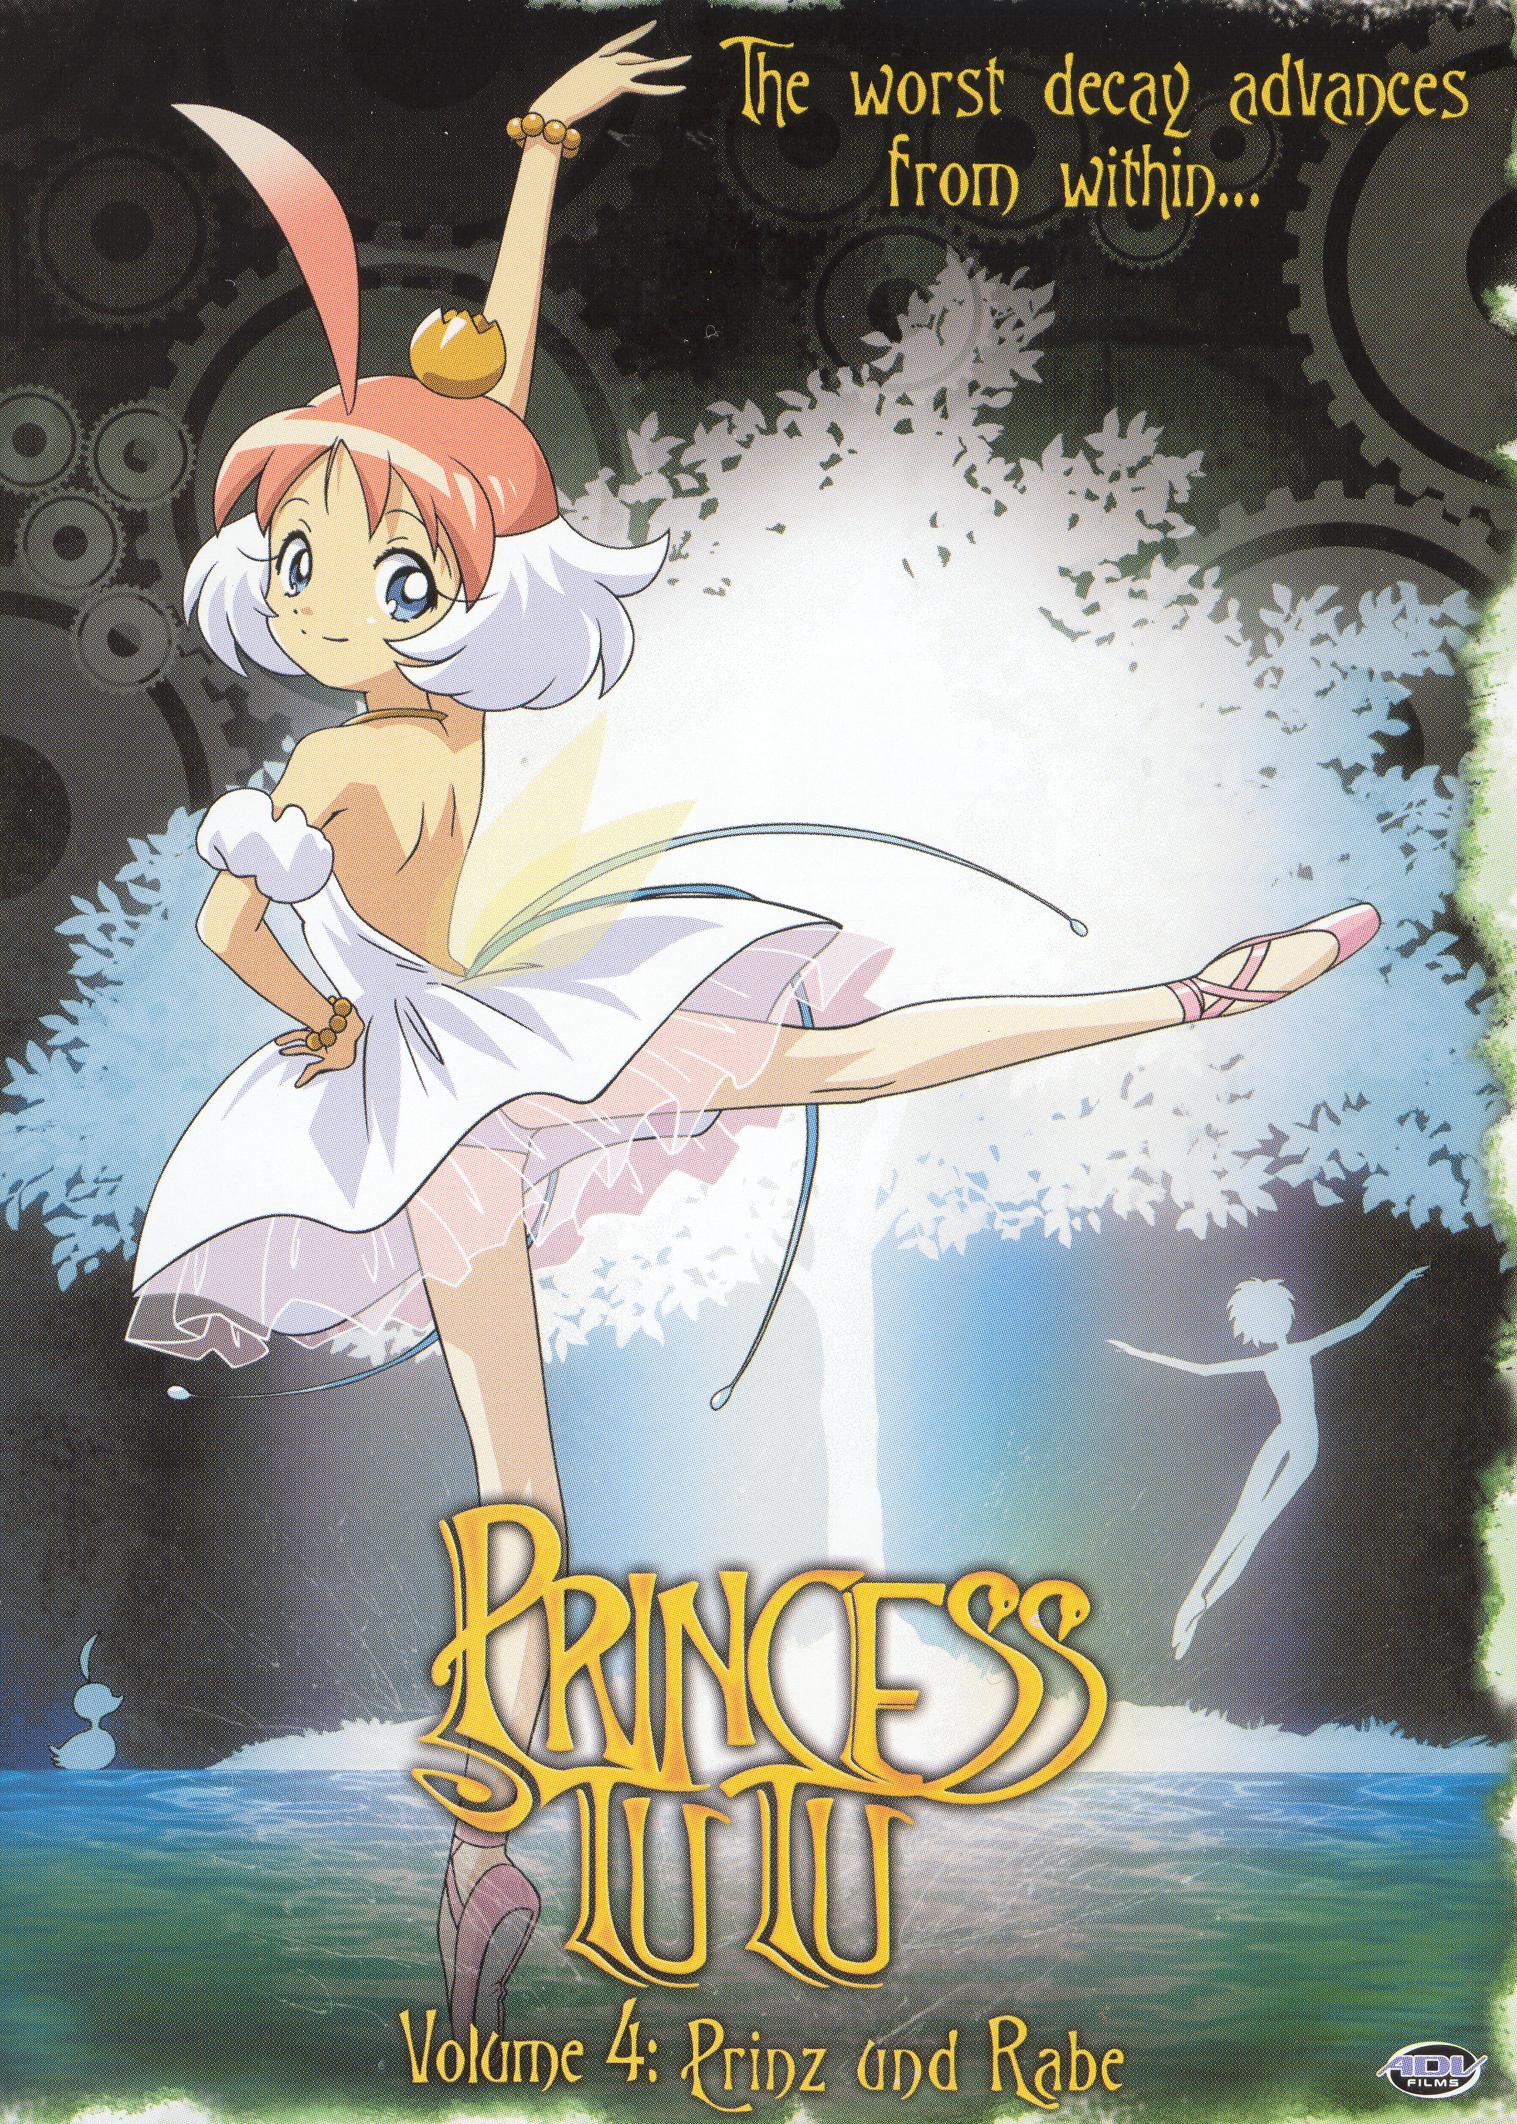 Best Buy: Princess Tutu, Vol. 4: Prinz and Rabe [DVD]